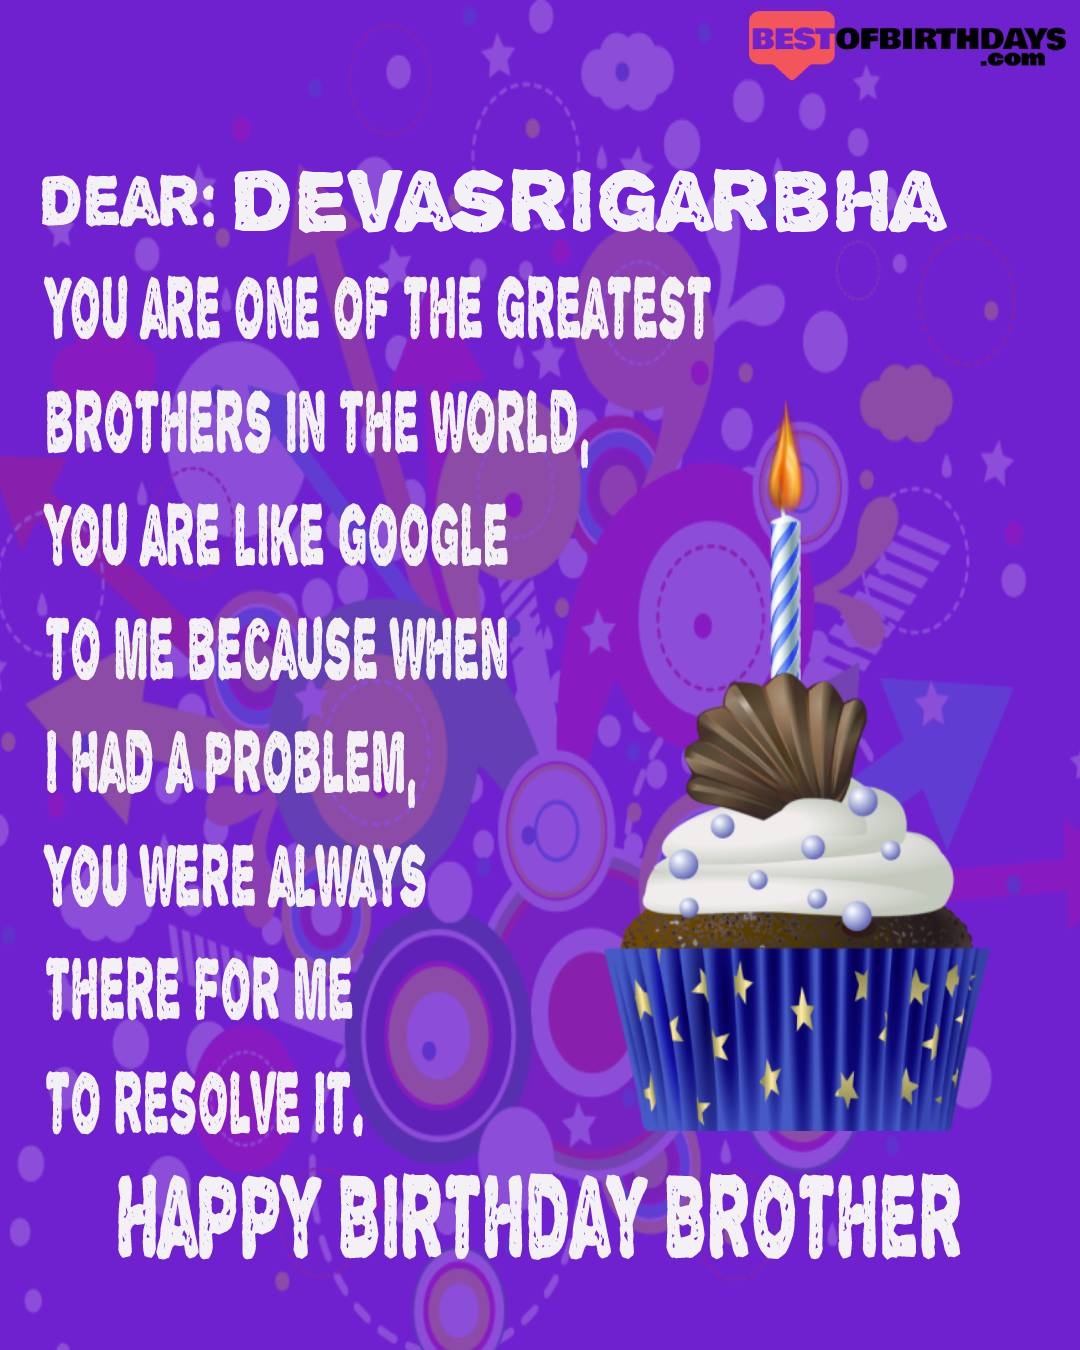 Happy birthday devasrigarbha bhai brother bro